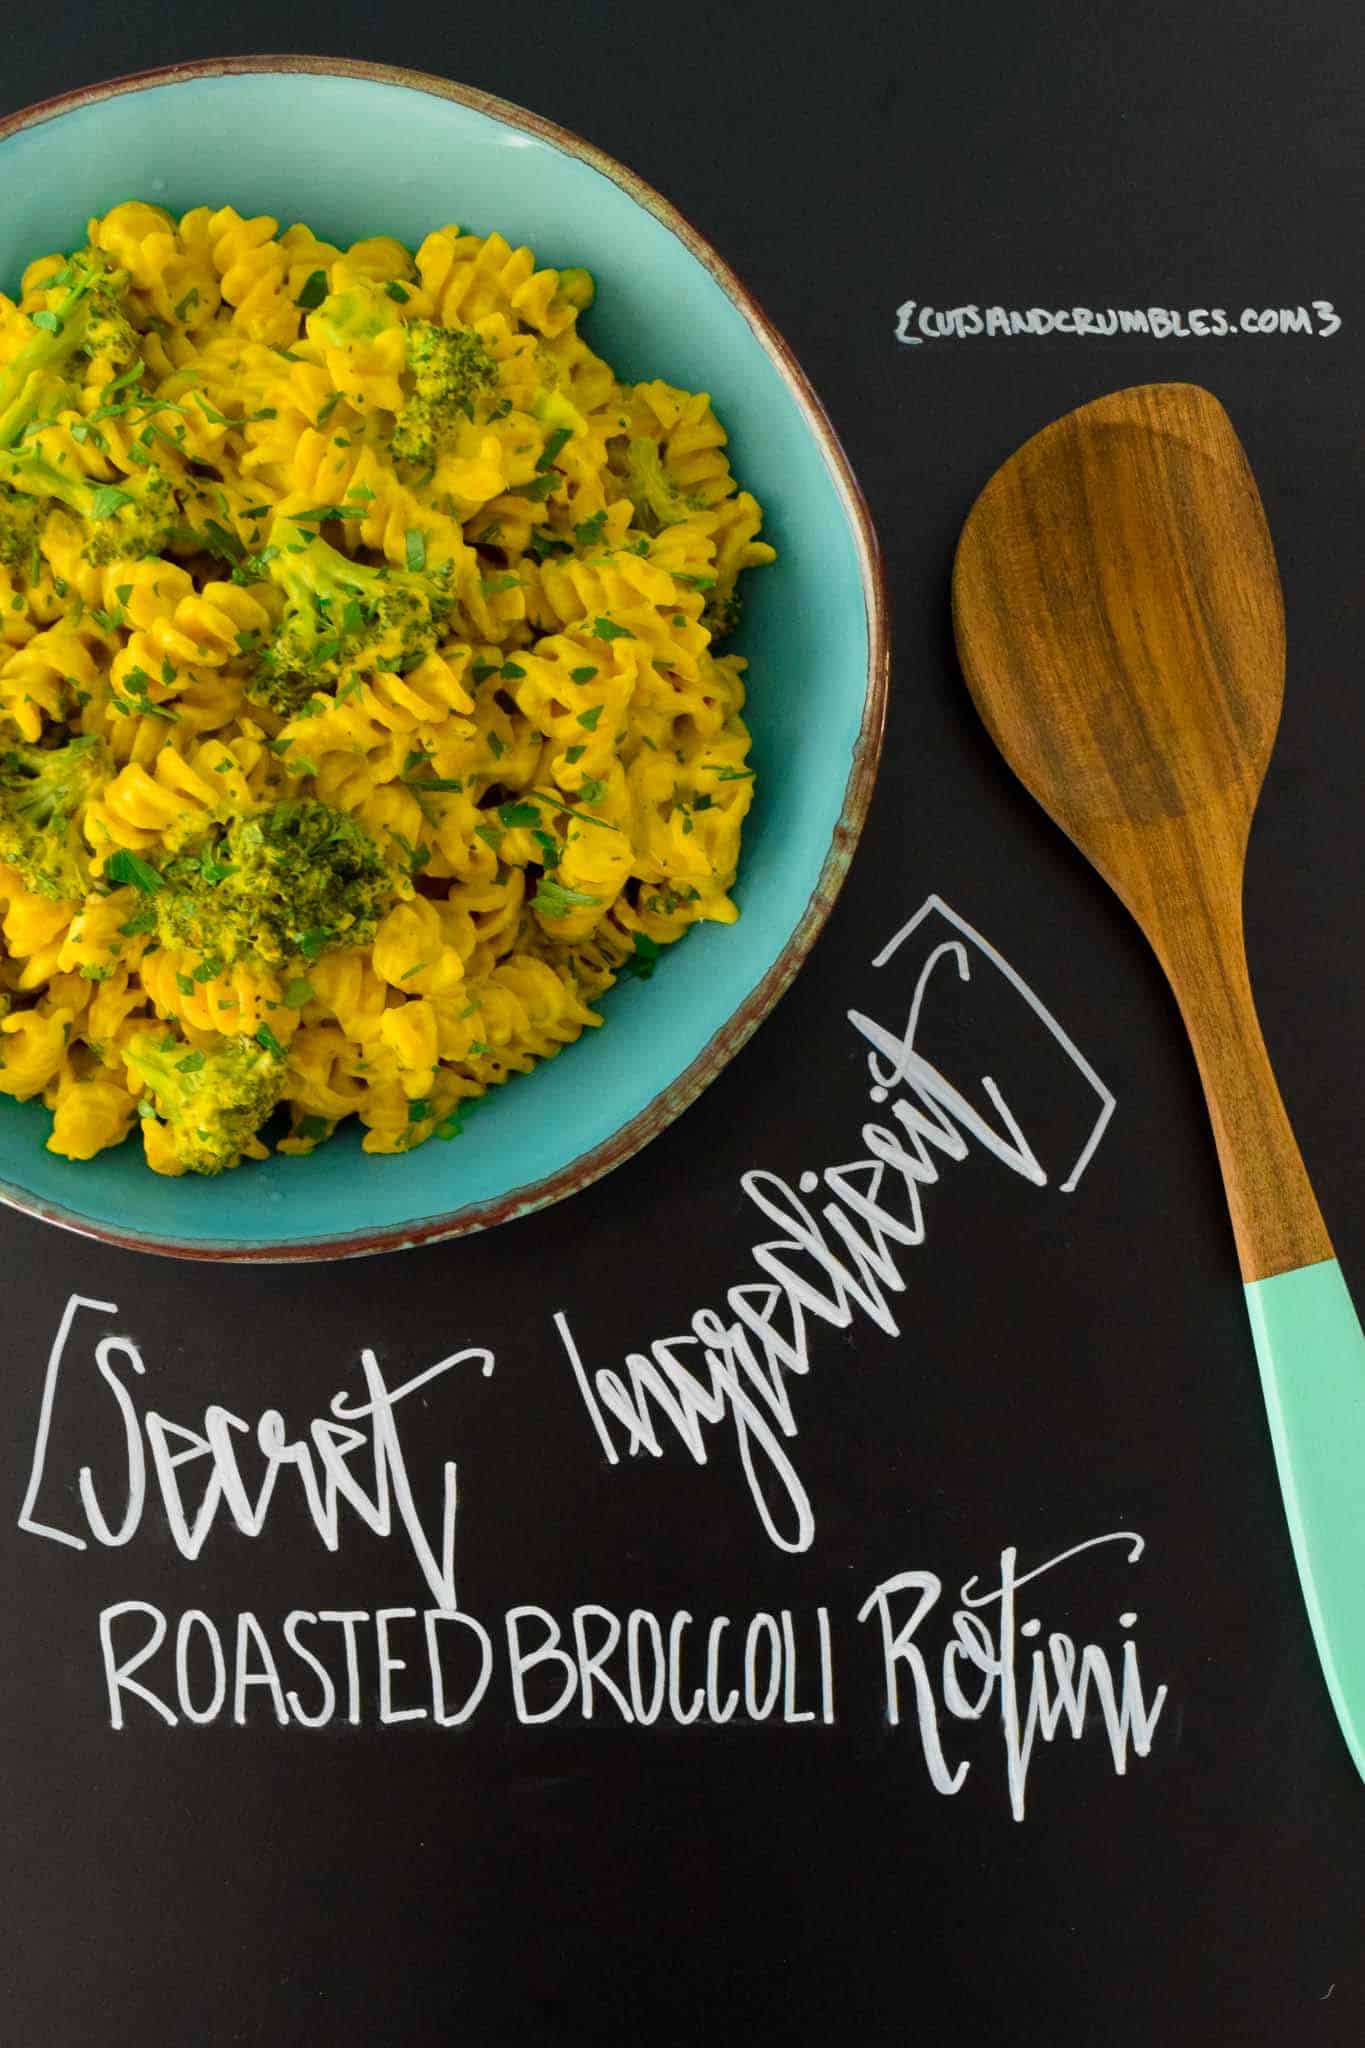 Secret Ingredient Roasted Broccoli Rotini with title written on chalkboard